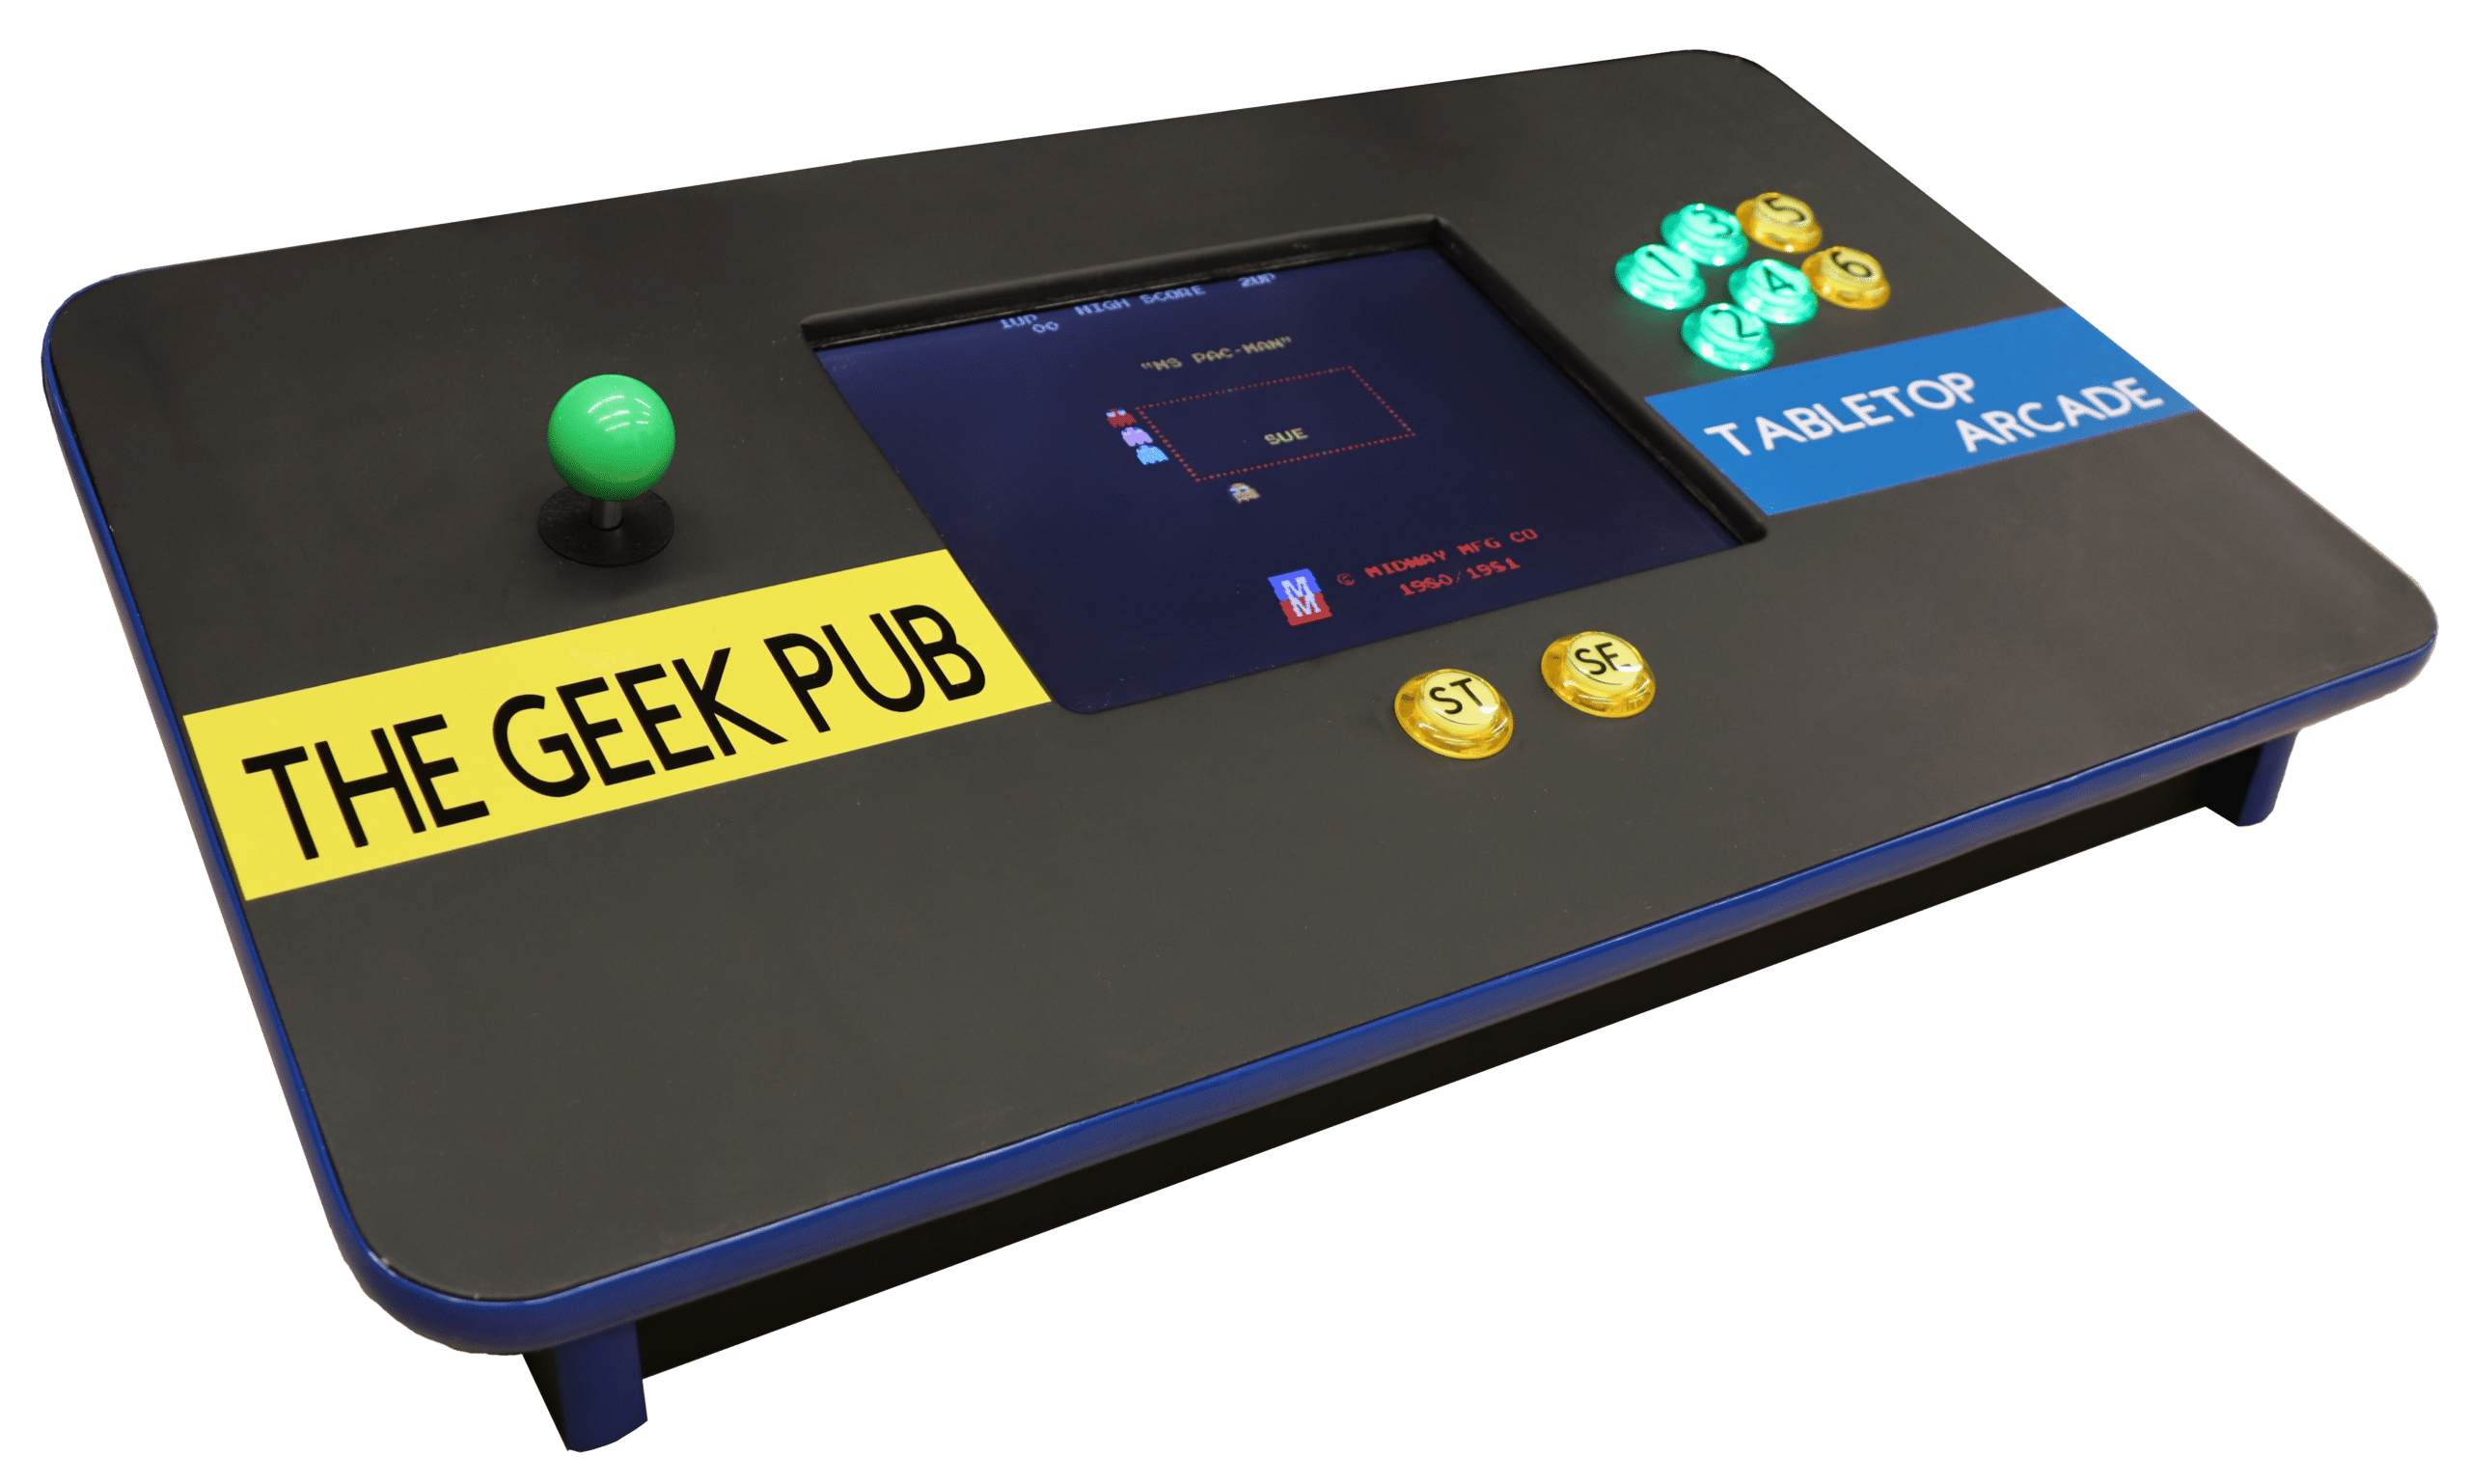 Tabletop Arcade Cabinet Plans The Geek Pub